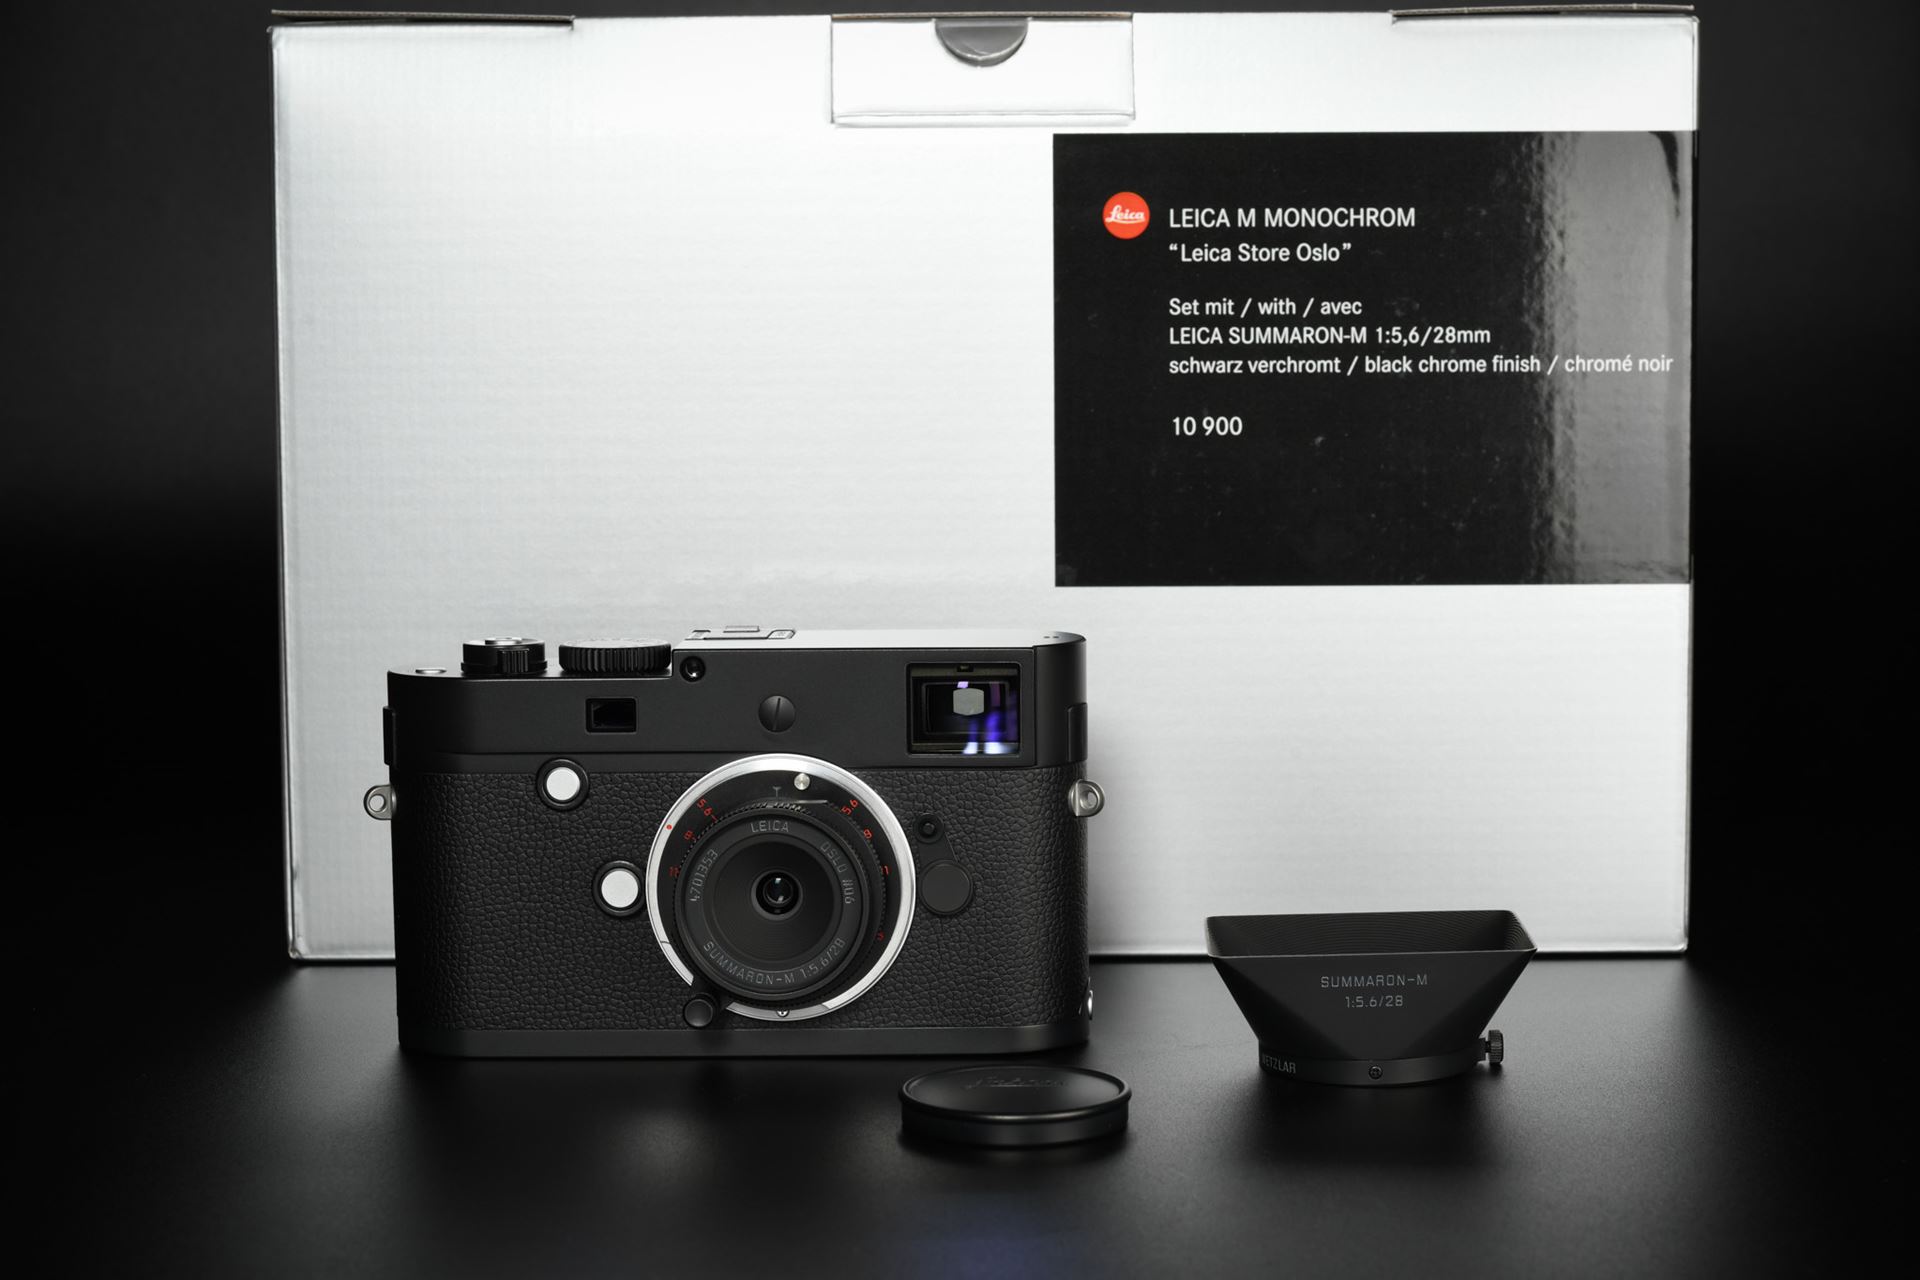 Picture of Leica M Monochrom "Leica Store Oslo" with Summaron 28mm f/5.6 Black